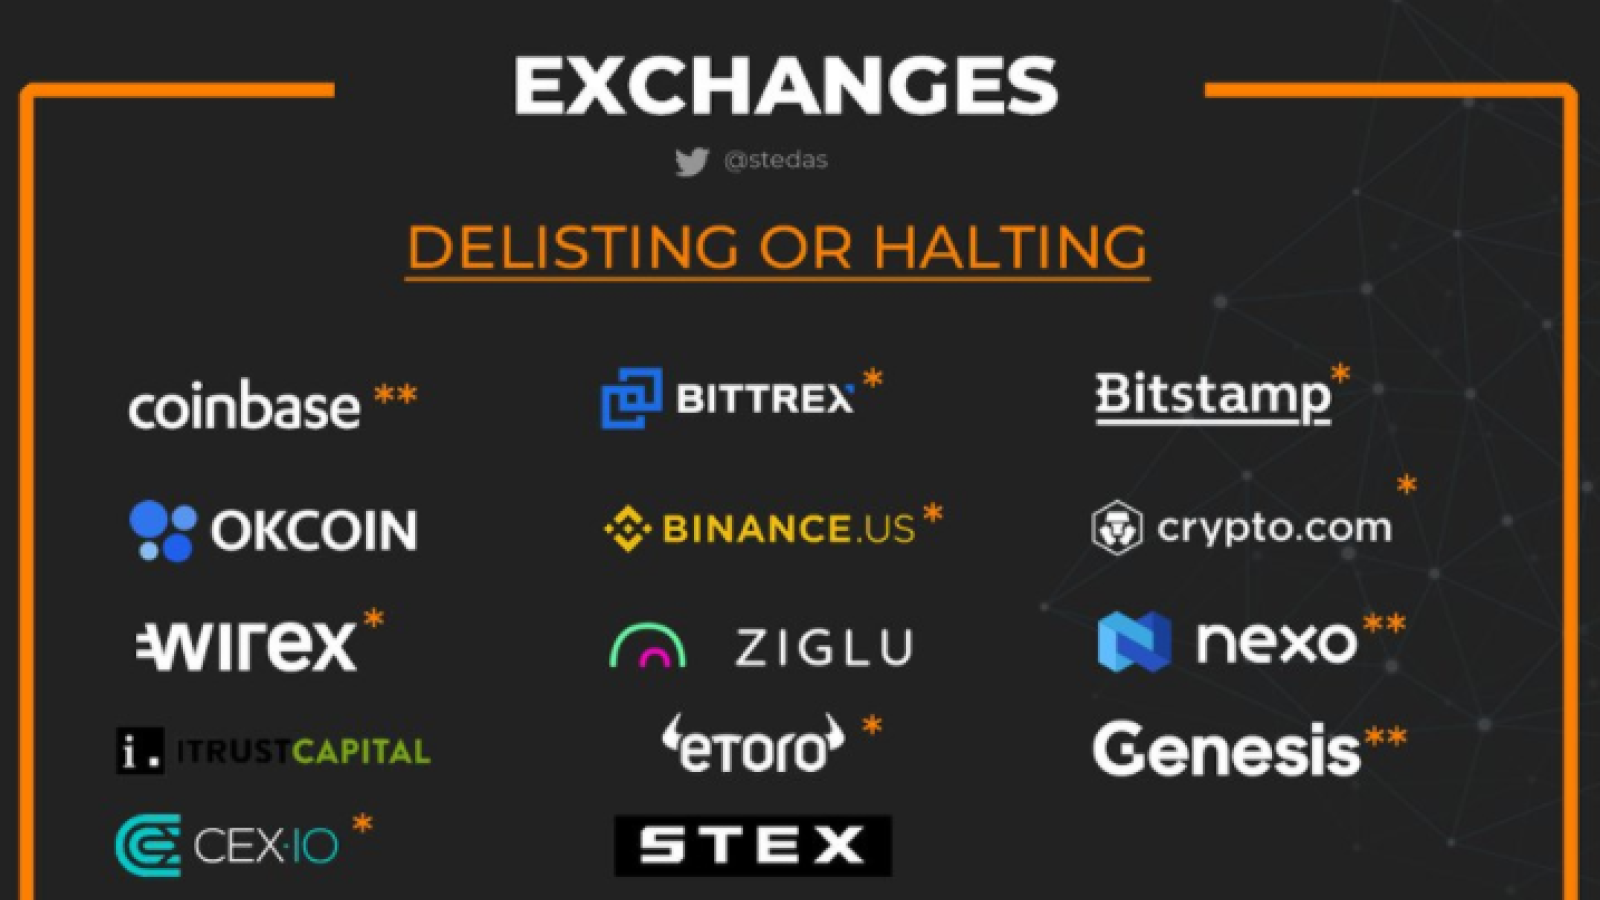 Exchanges